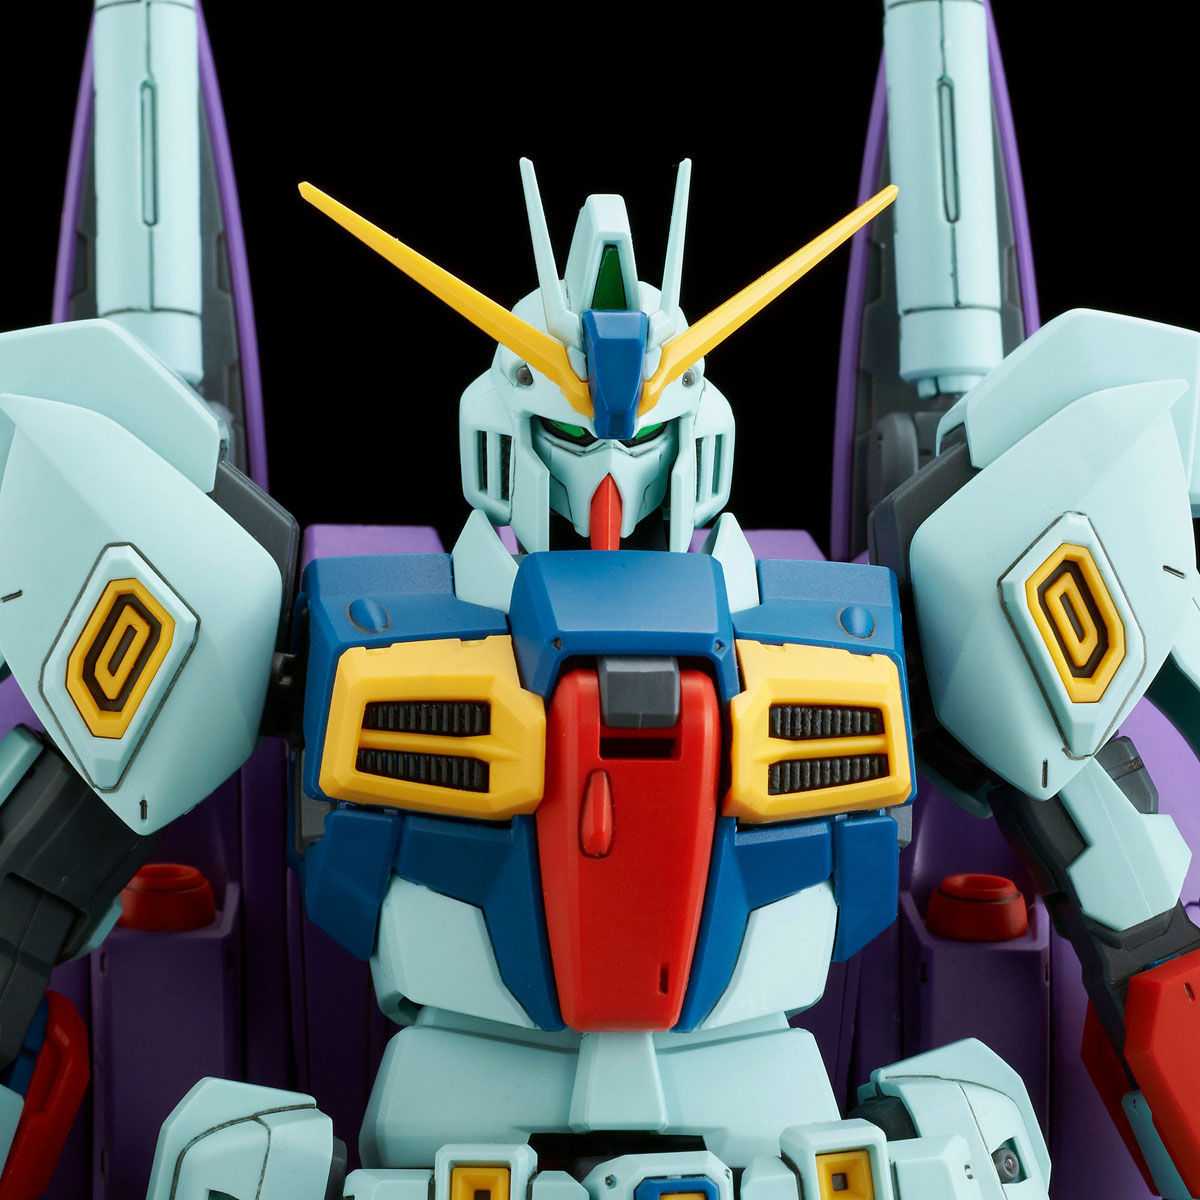 MG 1/100 RGZ-91B Re-GZ(Refined Gundam Zeta) Custom